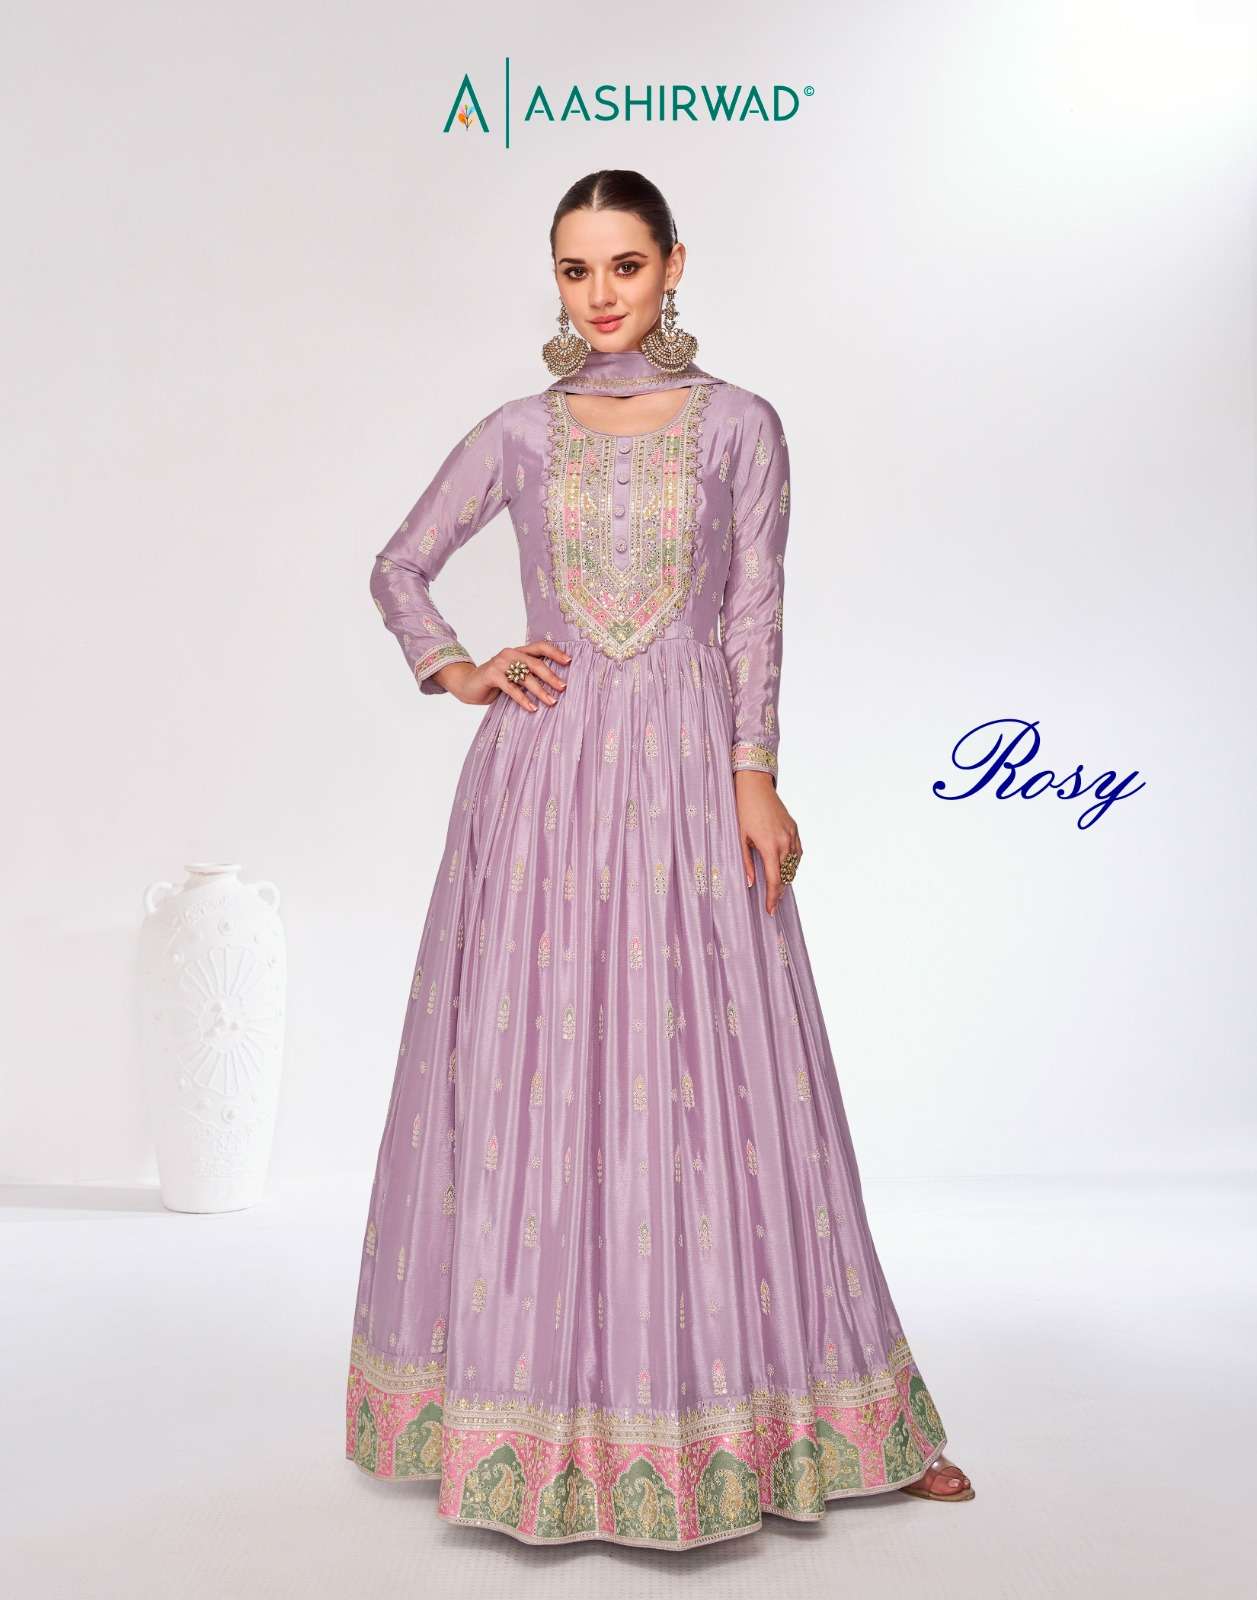 aashirwad creation rosy 9980-9983 series heavy designer party wear dress material catalogue wholesale surat gujarat